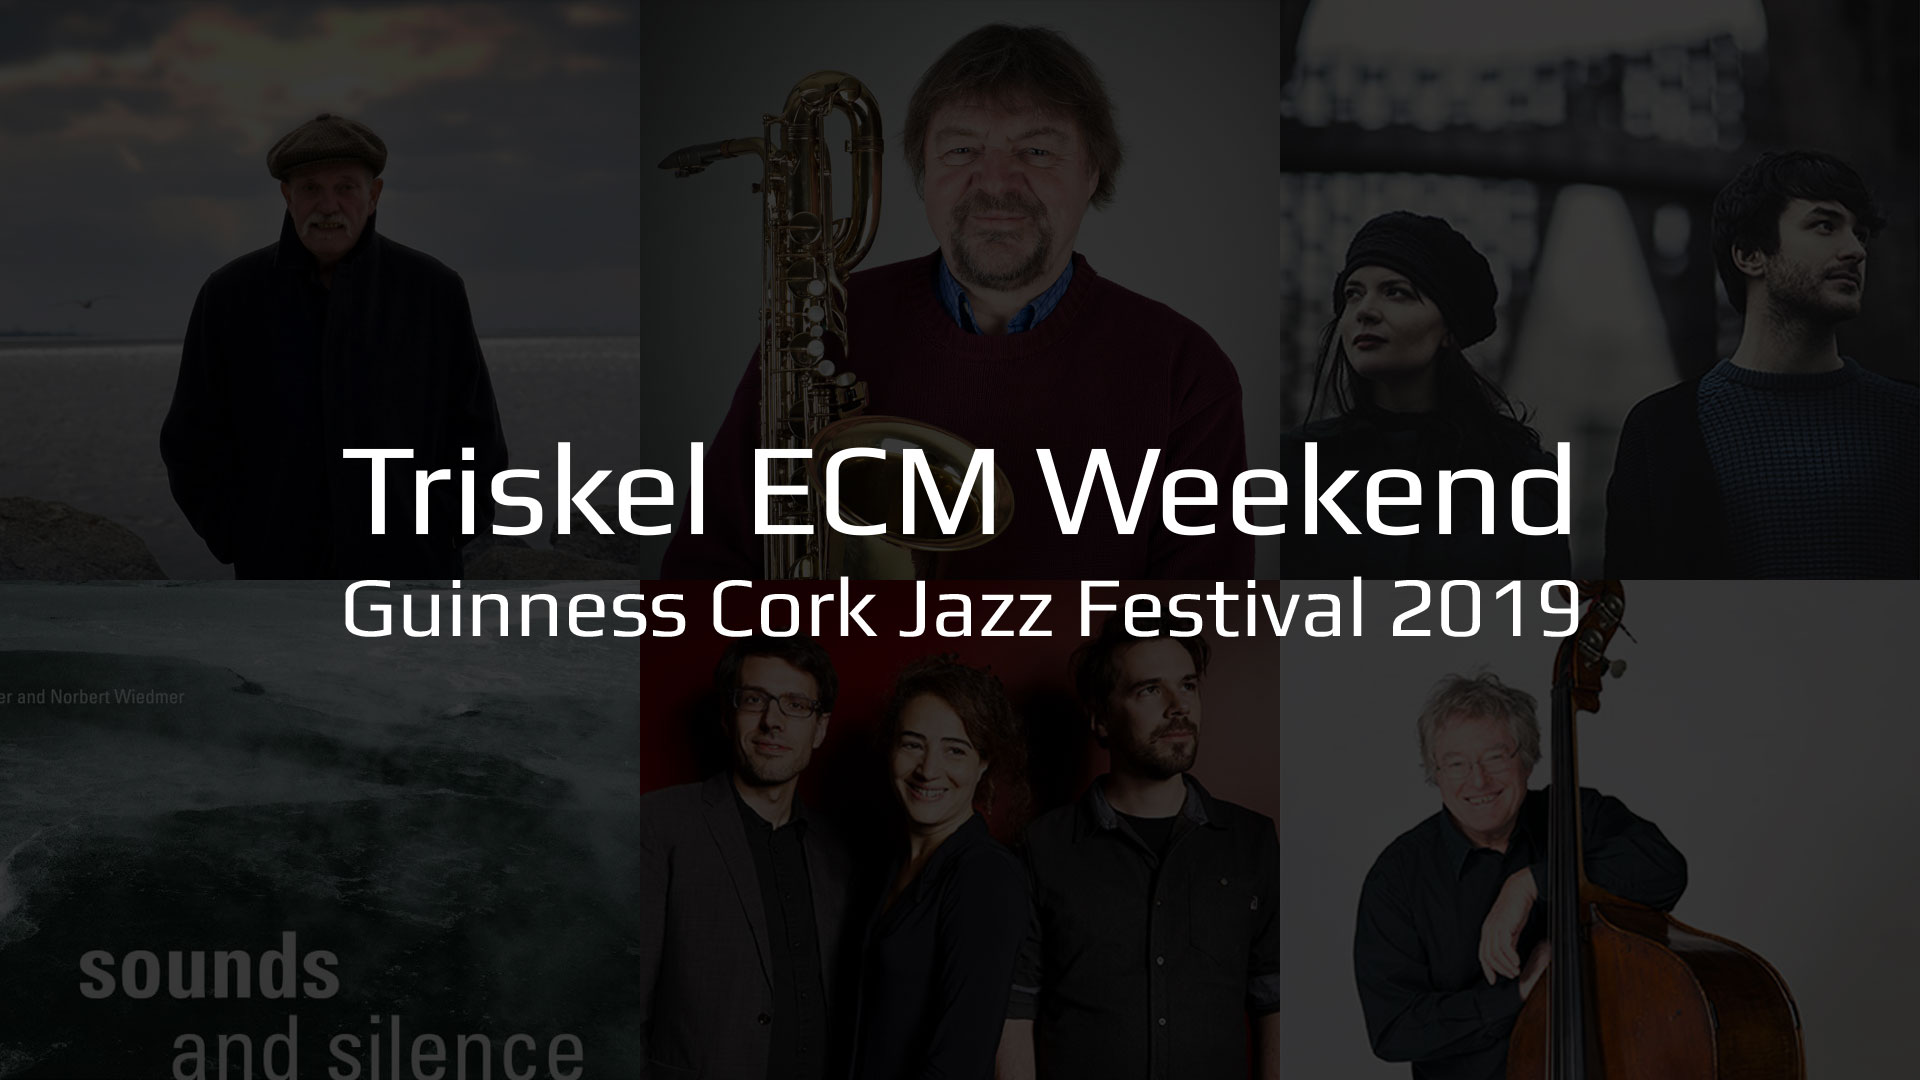 Triskel ECM Weekend at the Guinness Cork Jazz Festival 2019